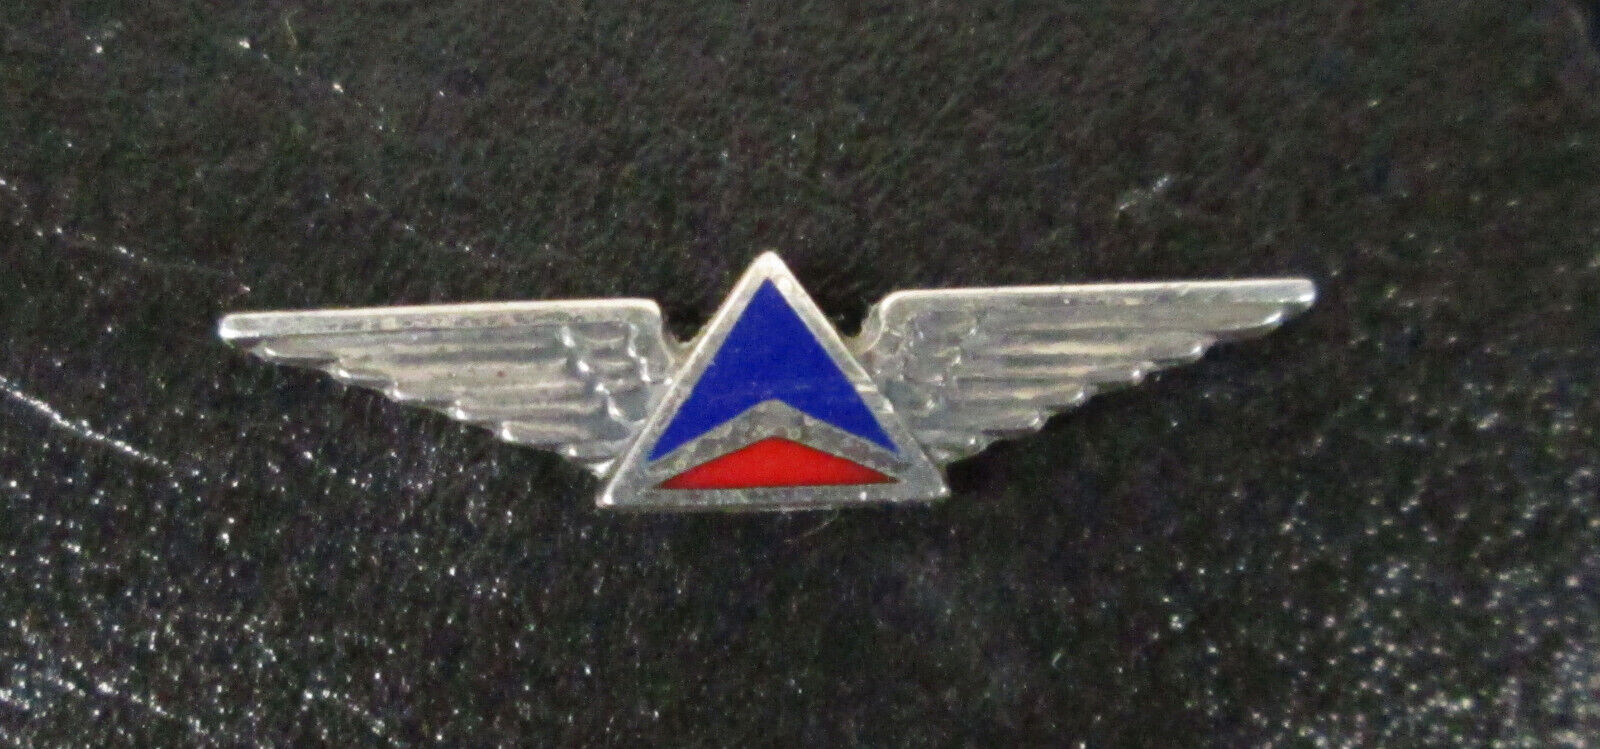 Vintage Delta Airlines Sterling Silver Hard Widget Service Pin by Maker M, 0.8g